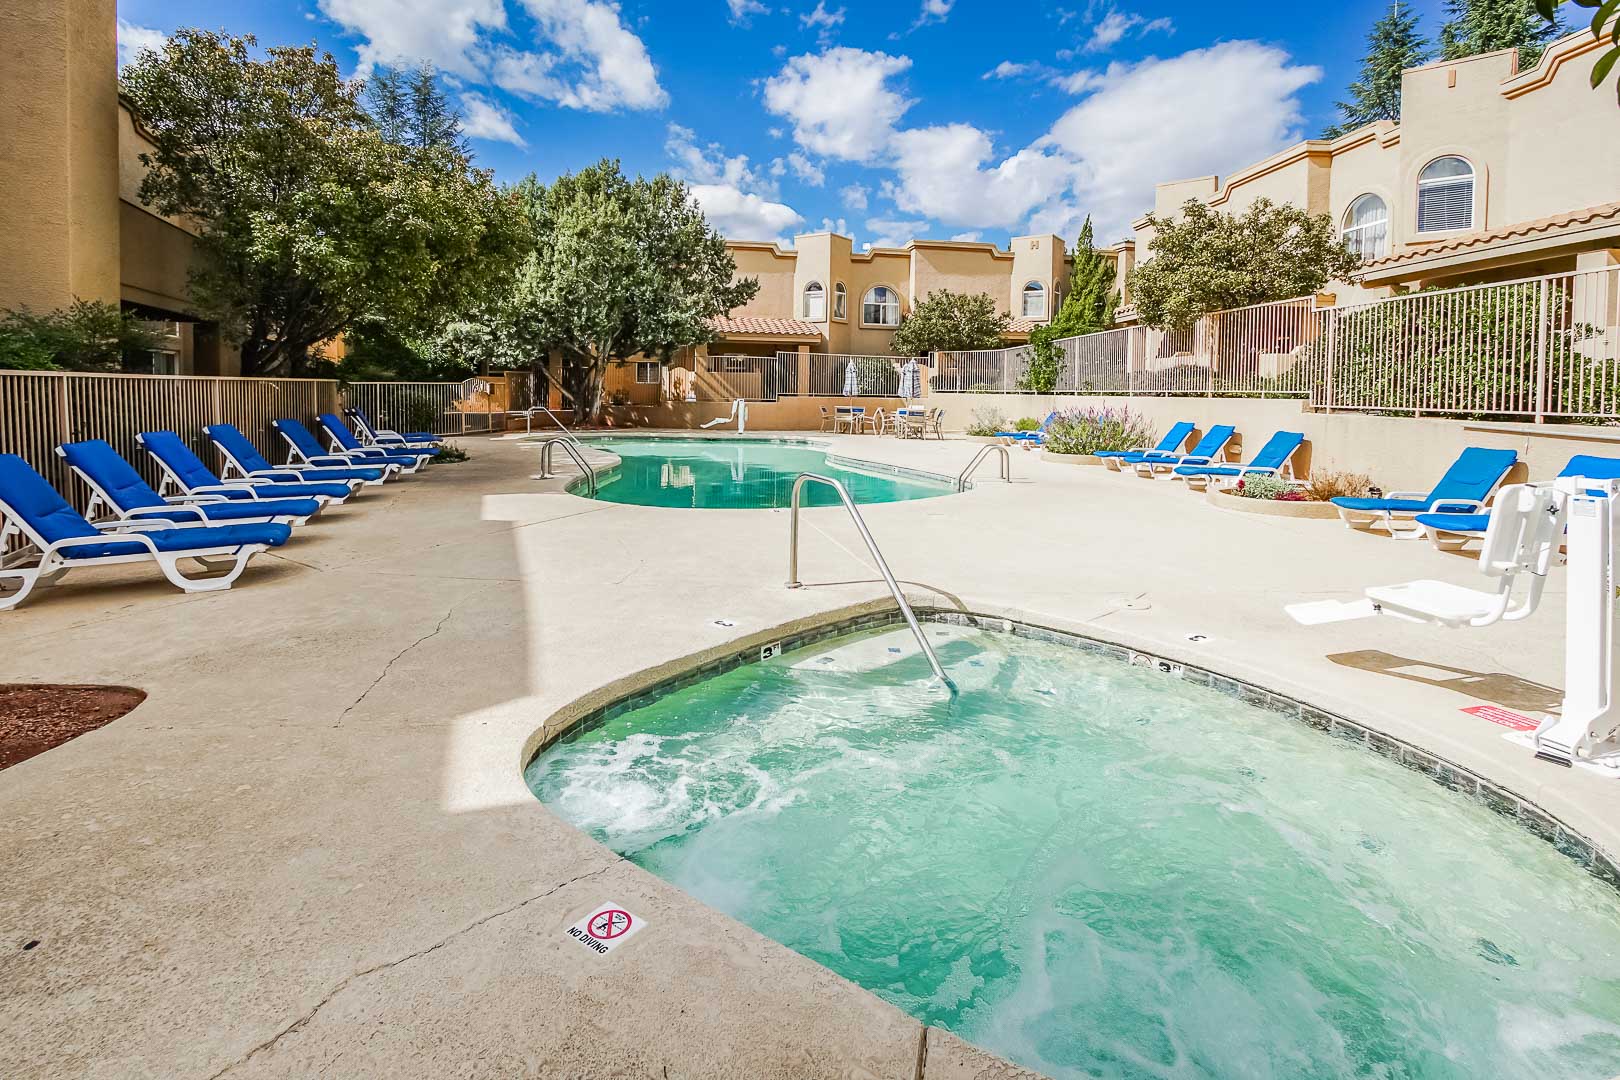 A beautiful outdoor swimming pool and jacuzzi at VRI's Sedona Springs Resort in Sedona, Arizona.